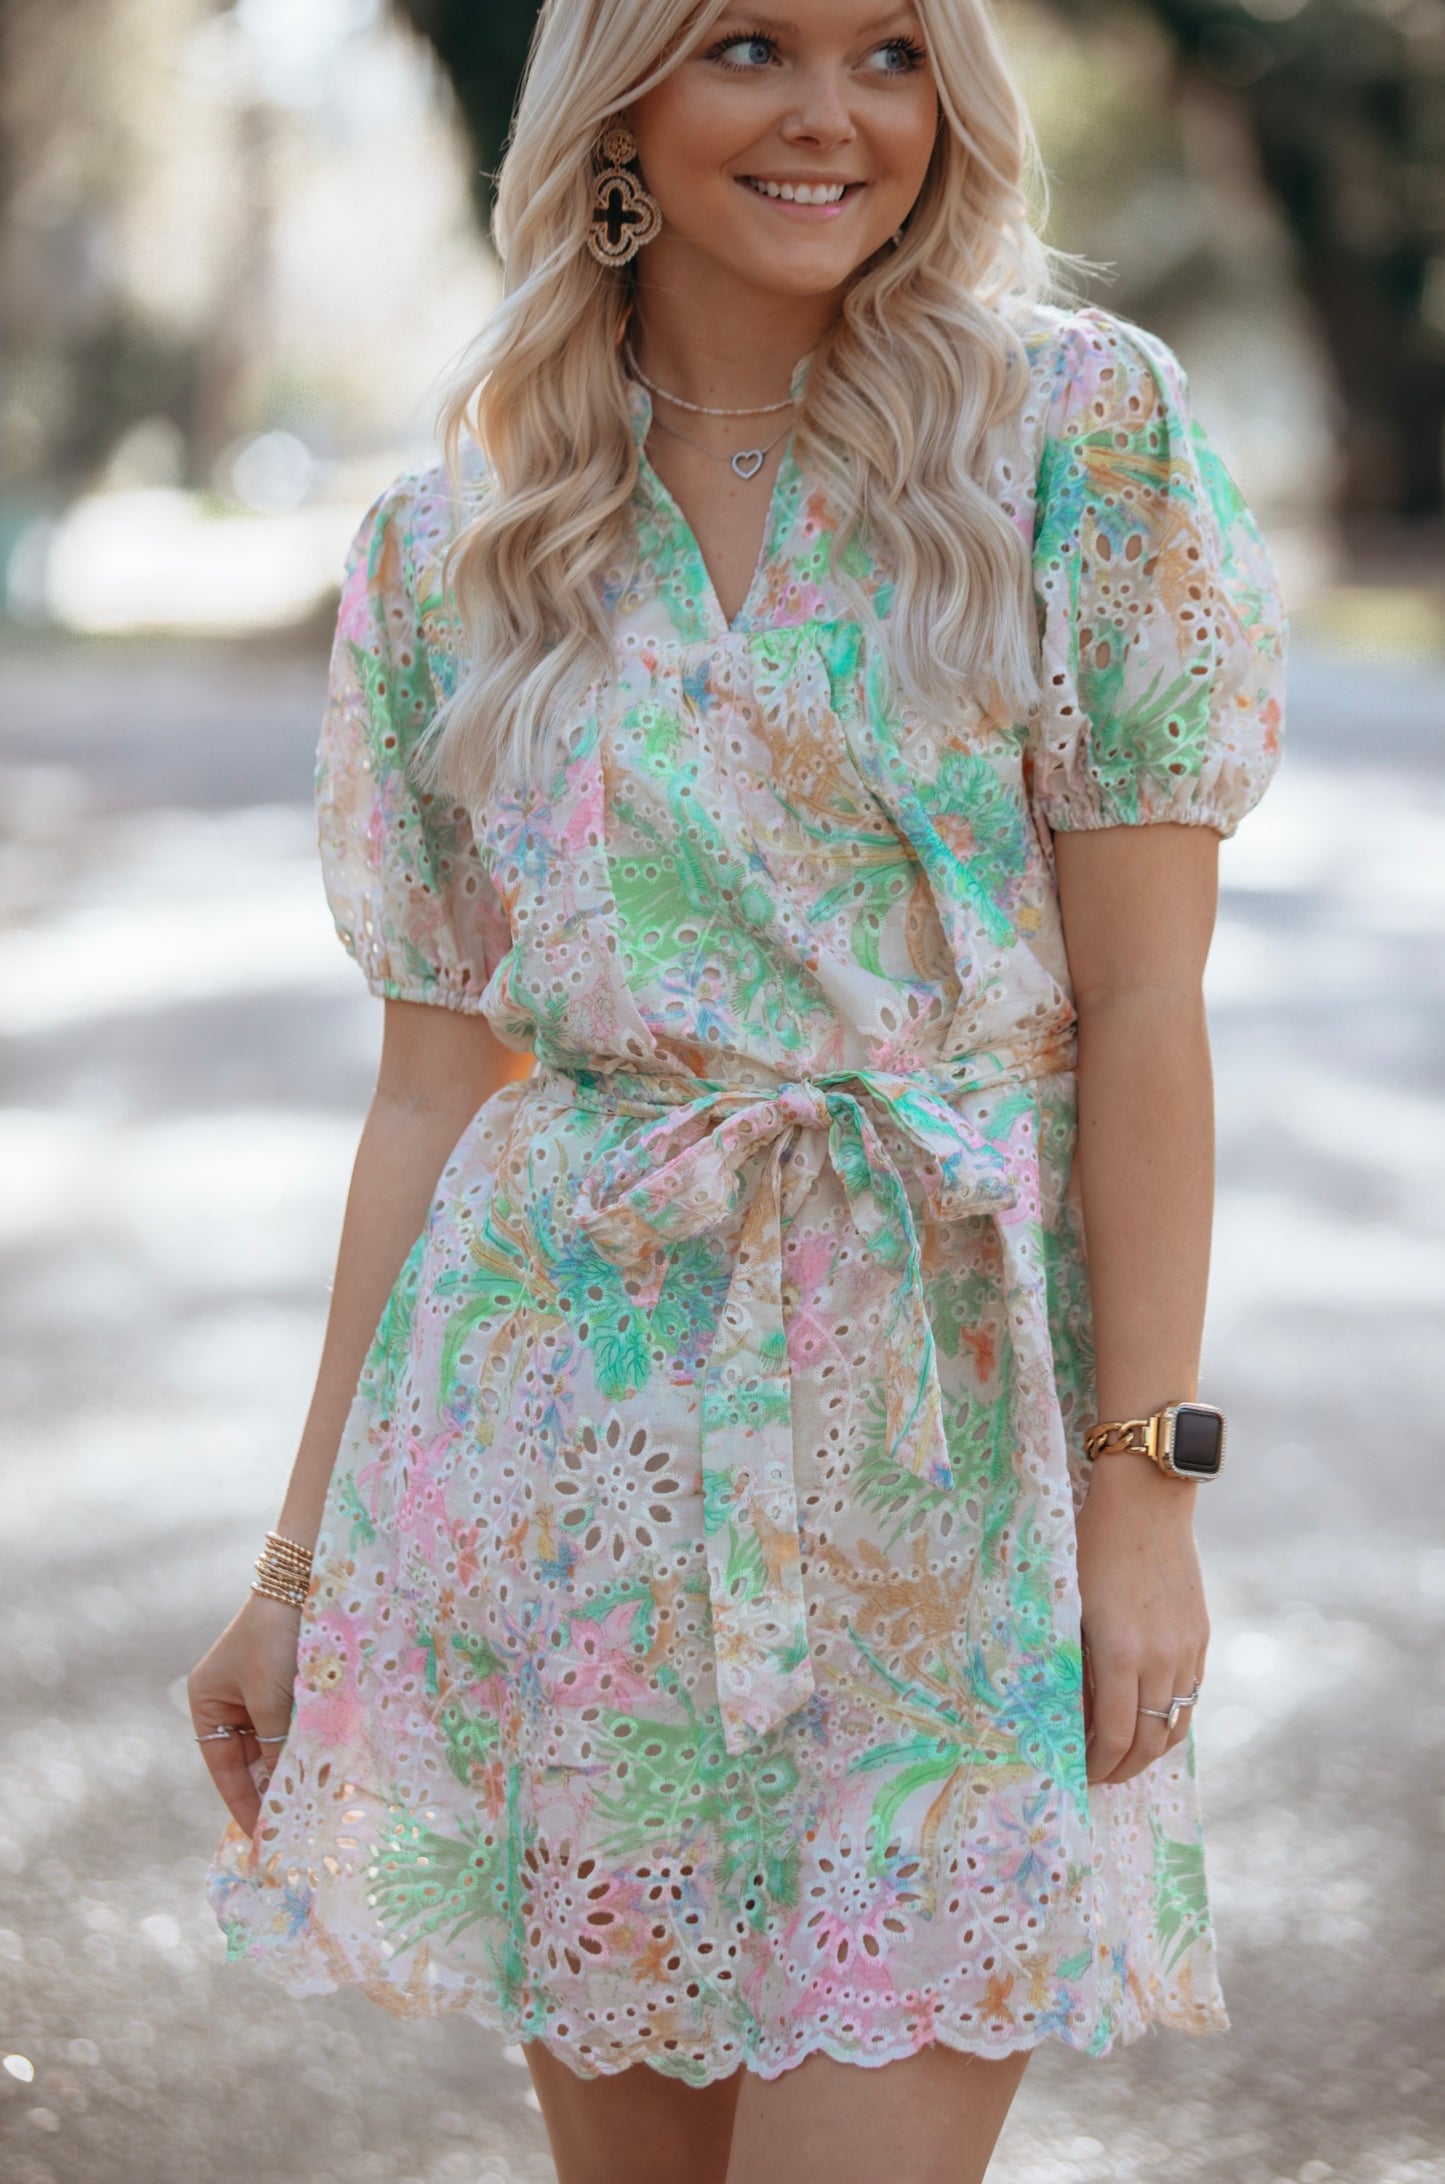 Floral pastel dress with eyelet details